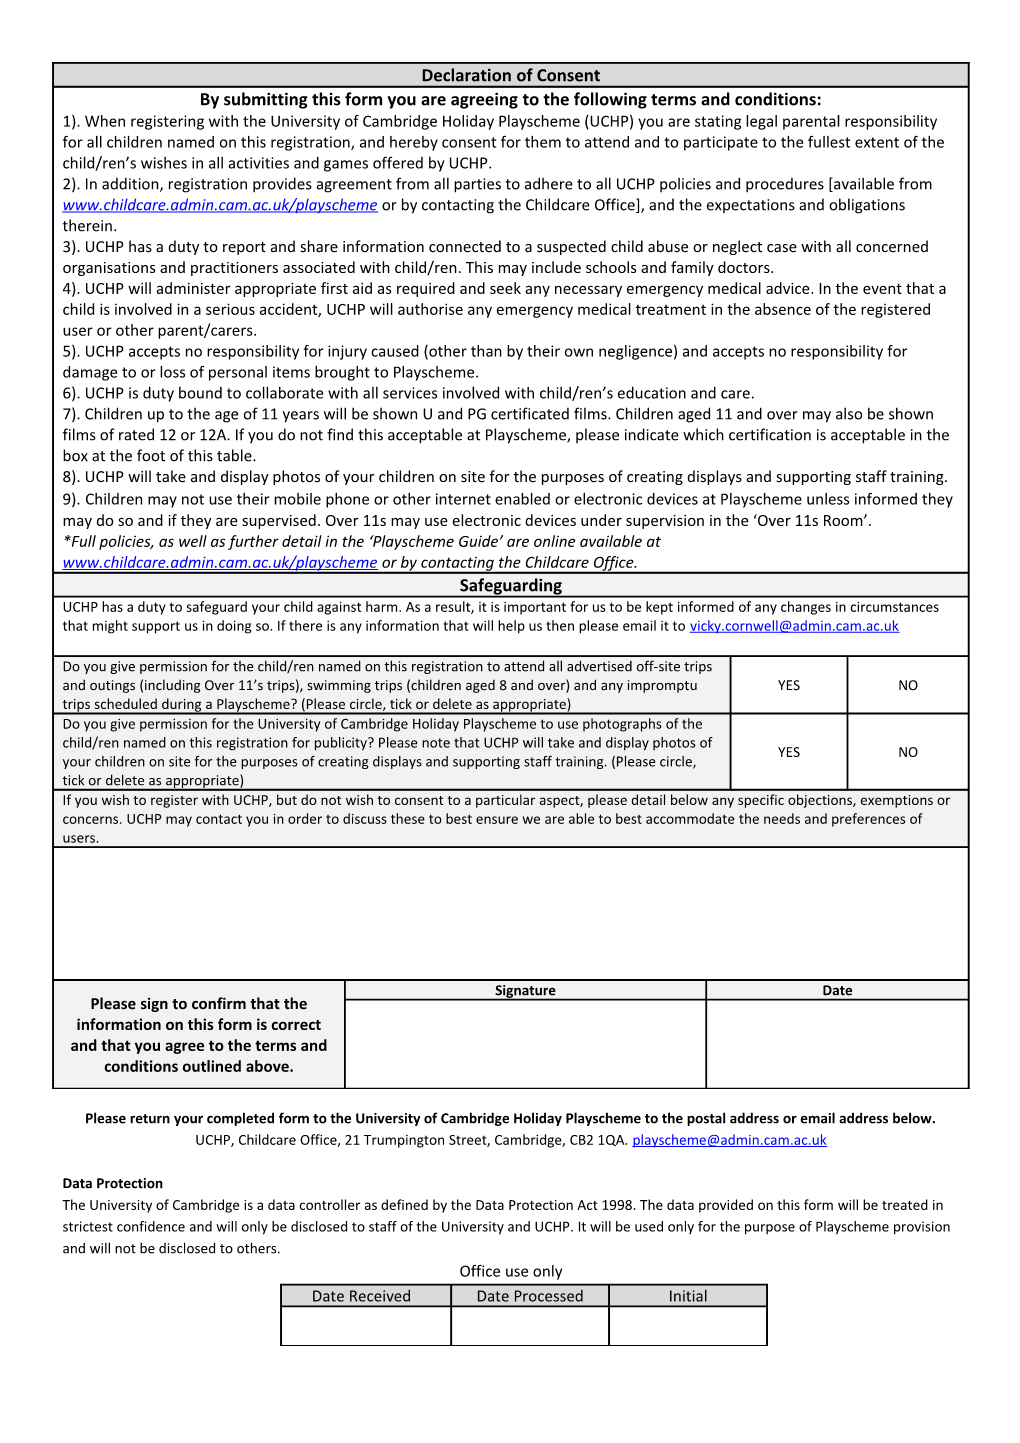 Annual Registration Form 2016